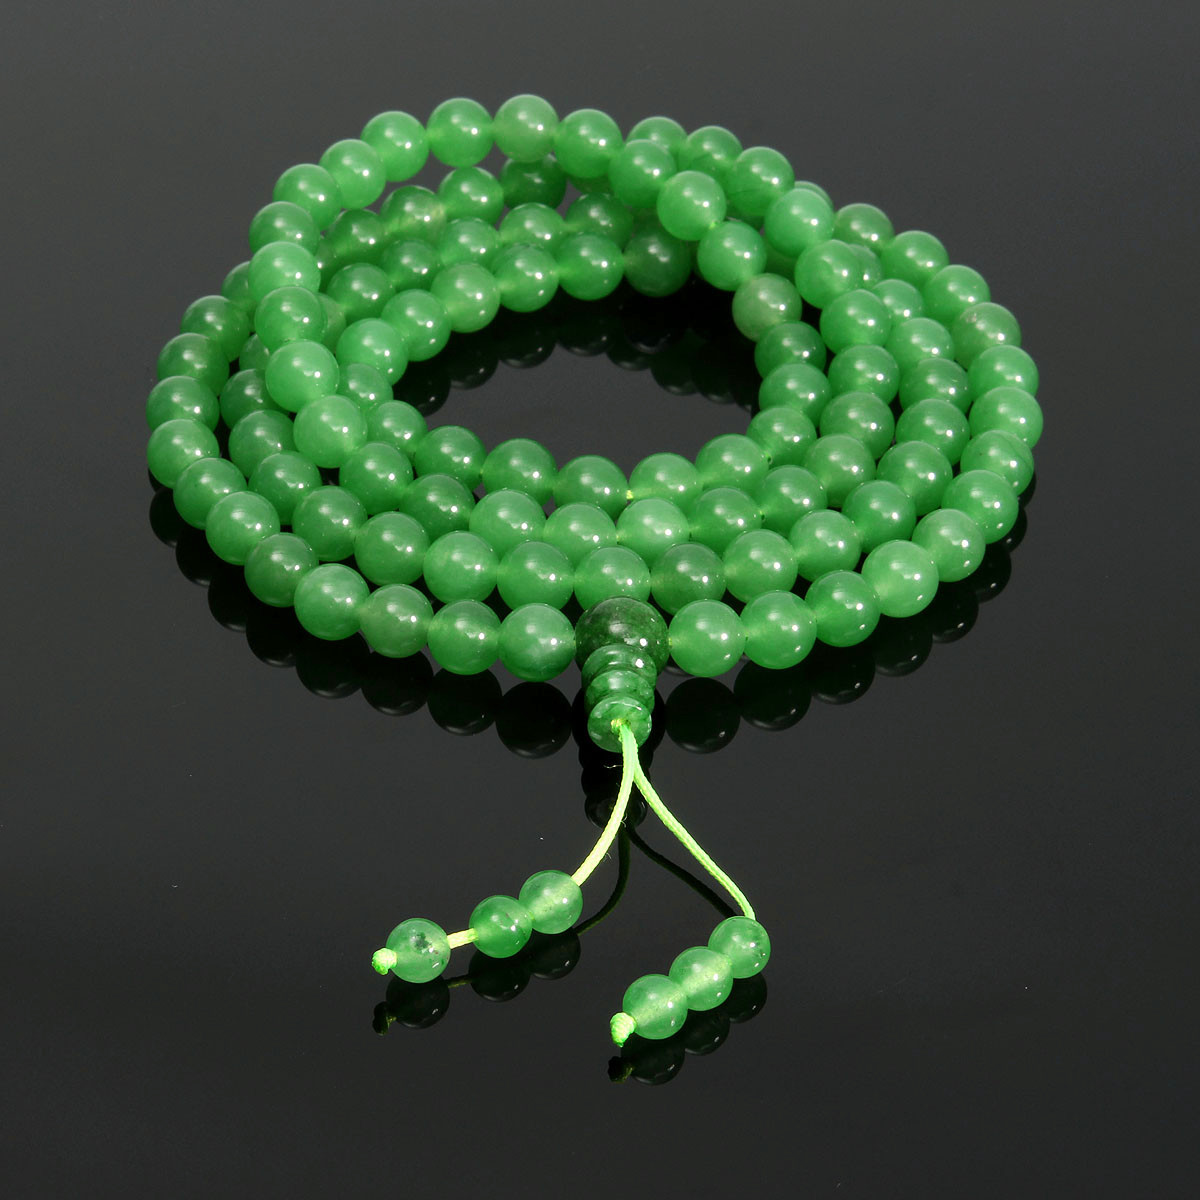 8mm-Green-Agate-Buddhist-Prayer-Beads-Bracelet-Necklace-Jewelry-1054960